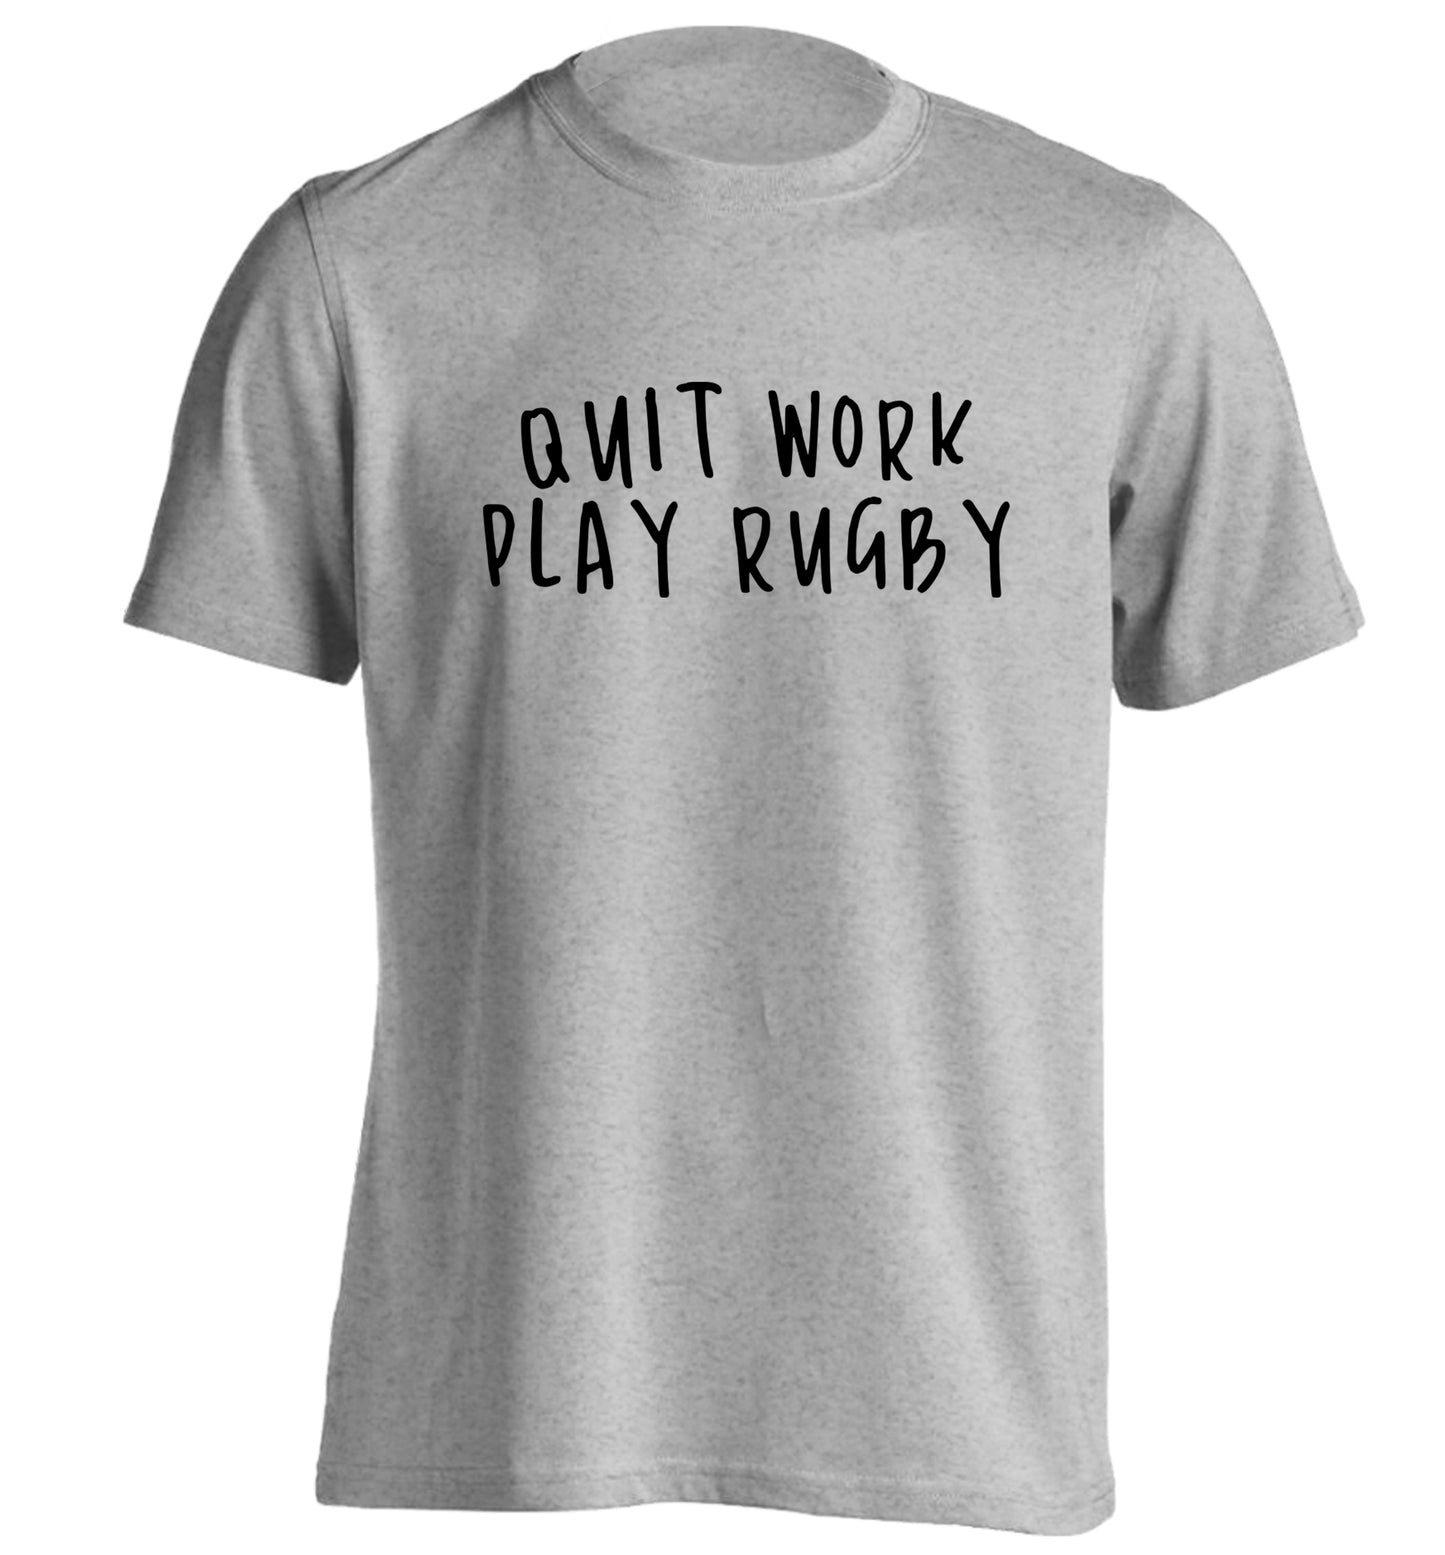 Quit work play rugby adults unisex grey Tshirt 2XL